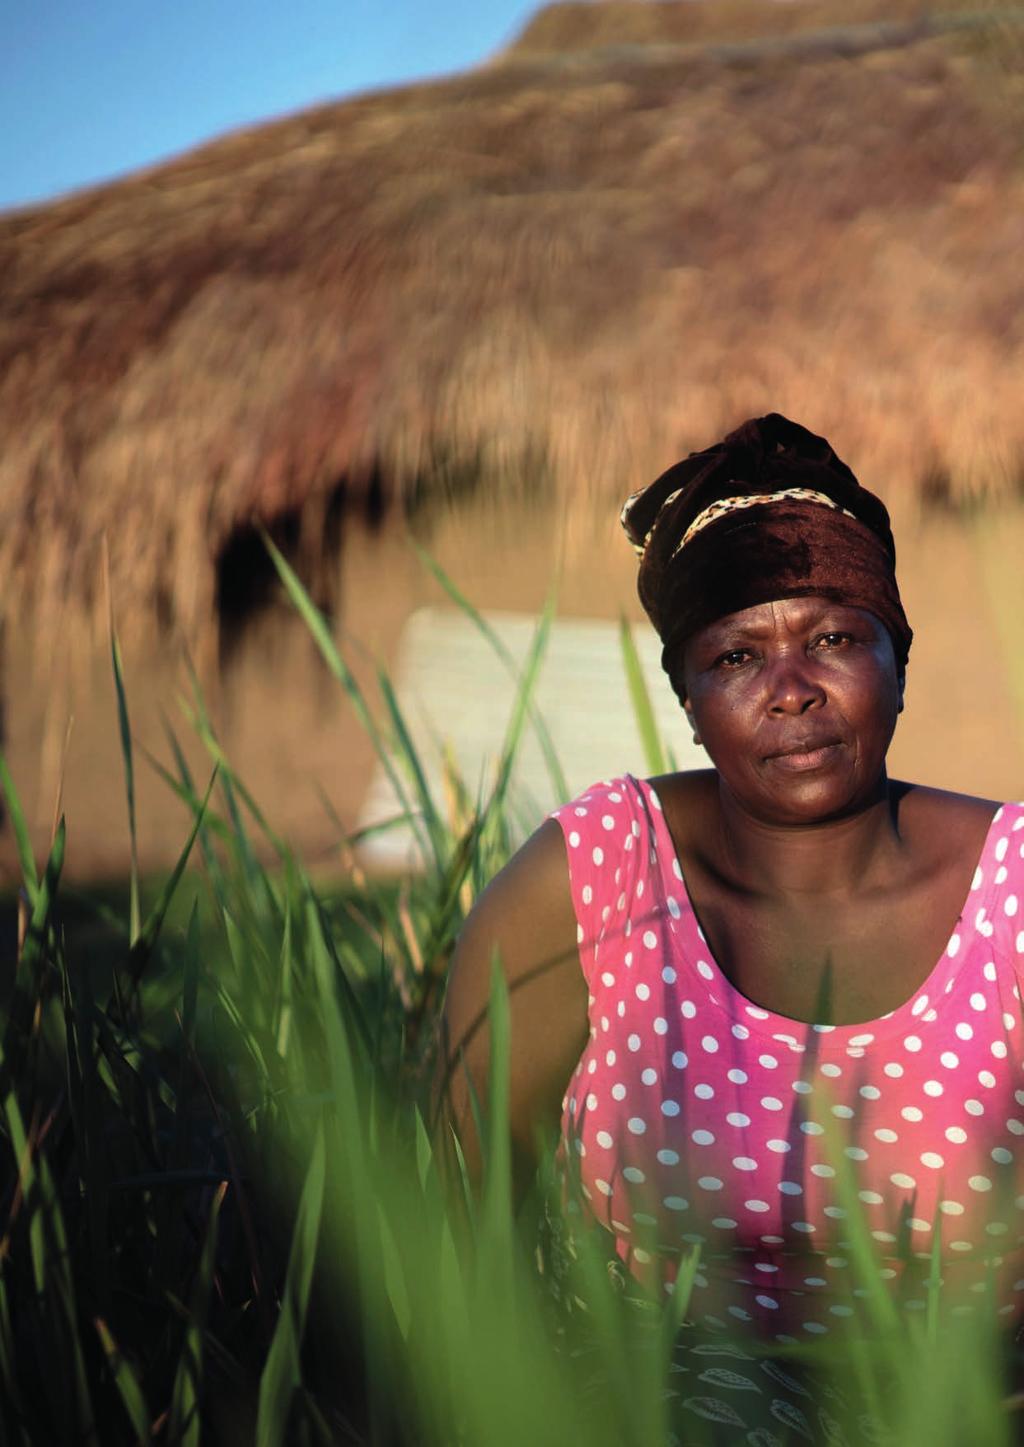 An internally displaced woman in Katanga Province in the Democratic